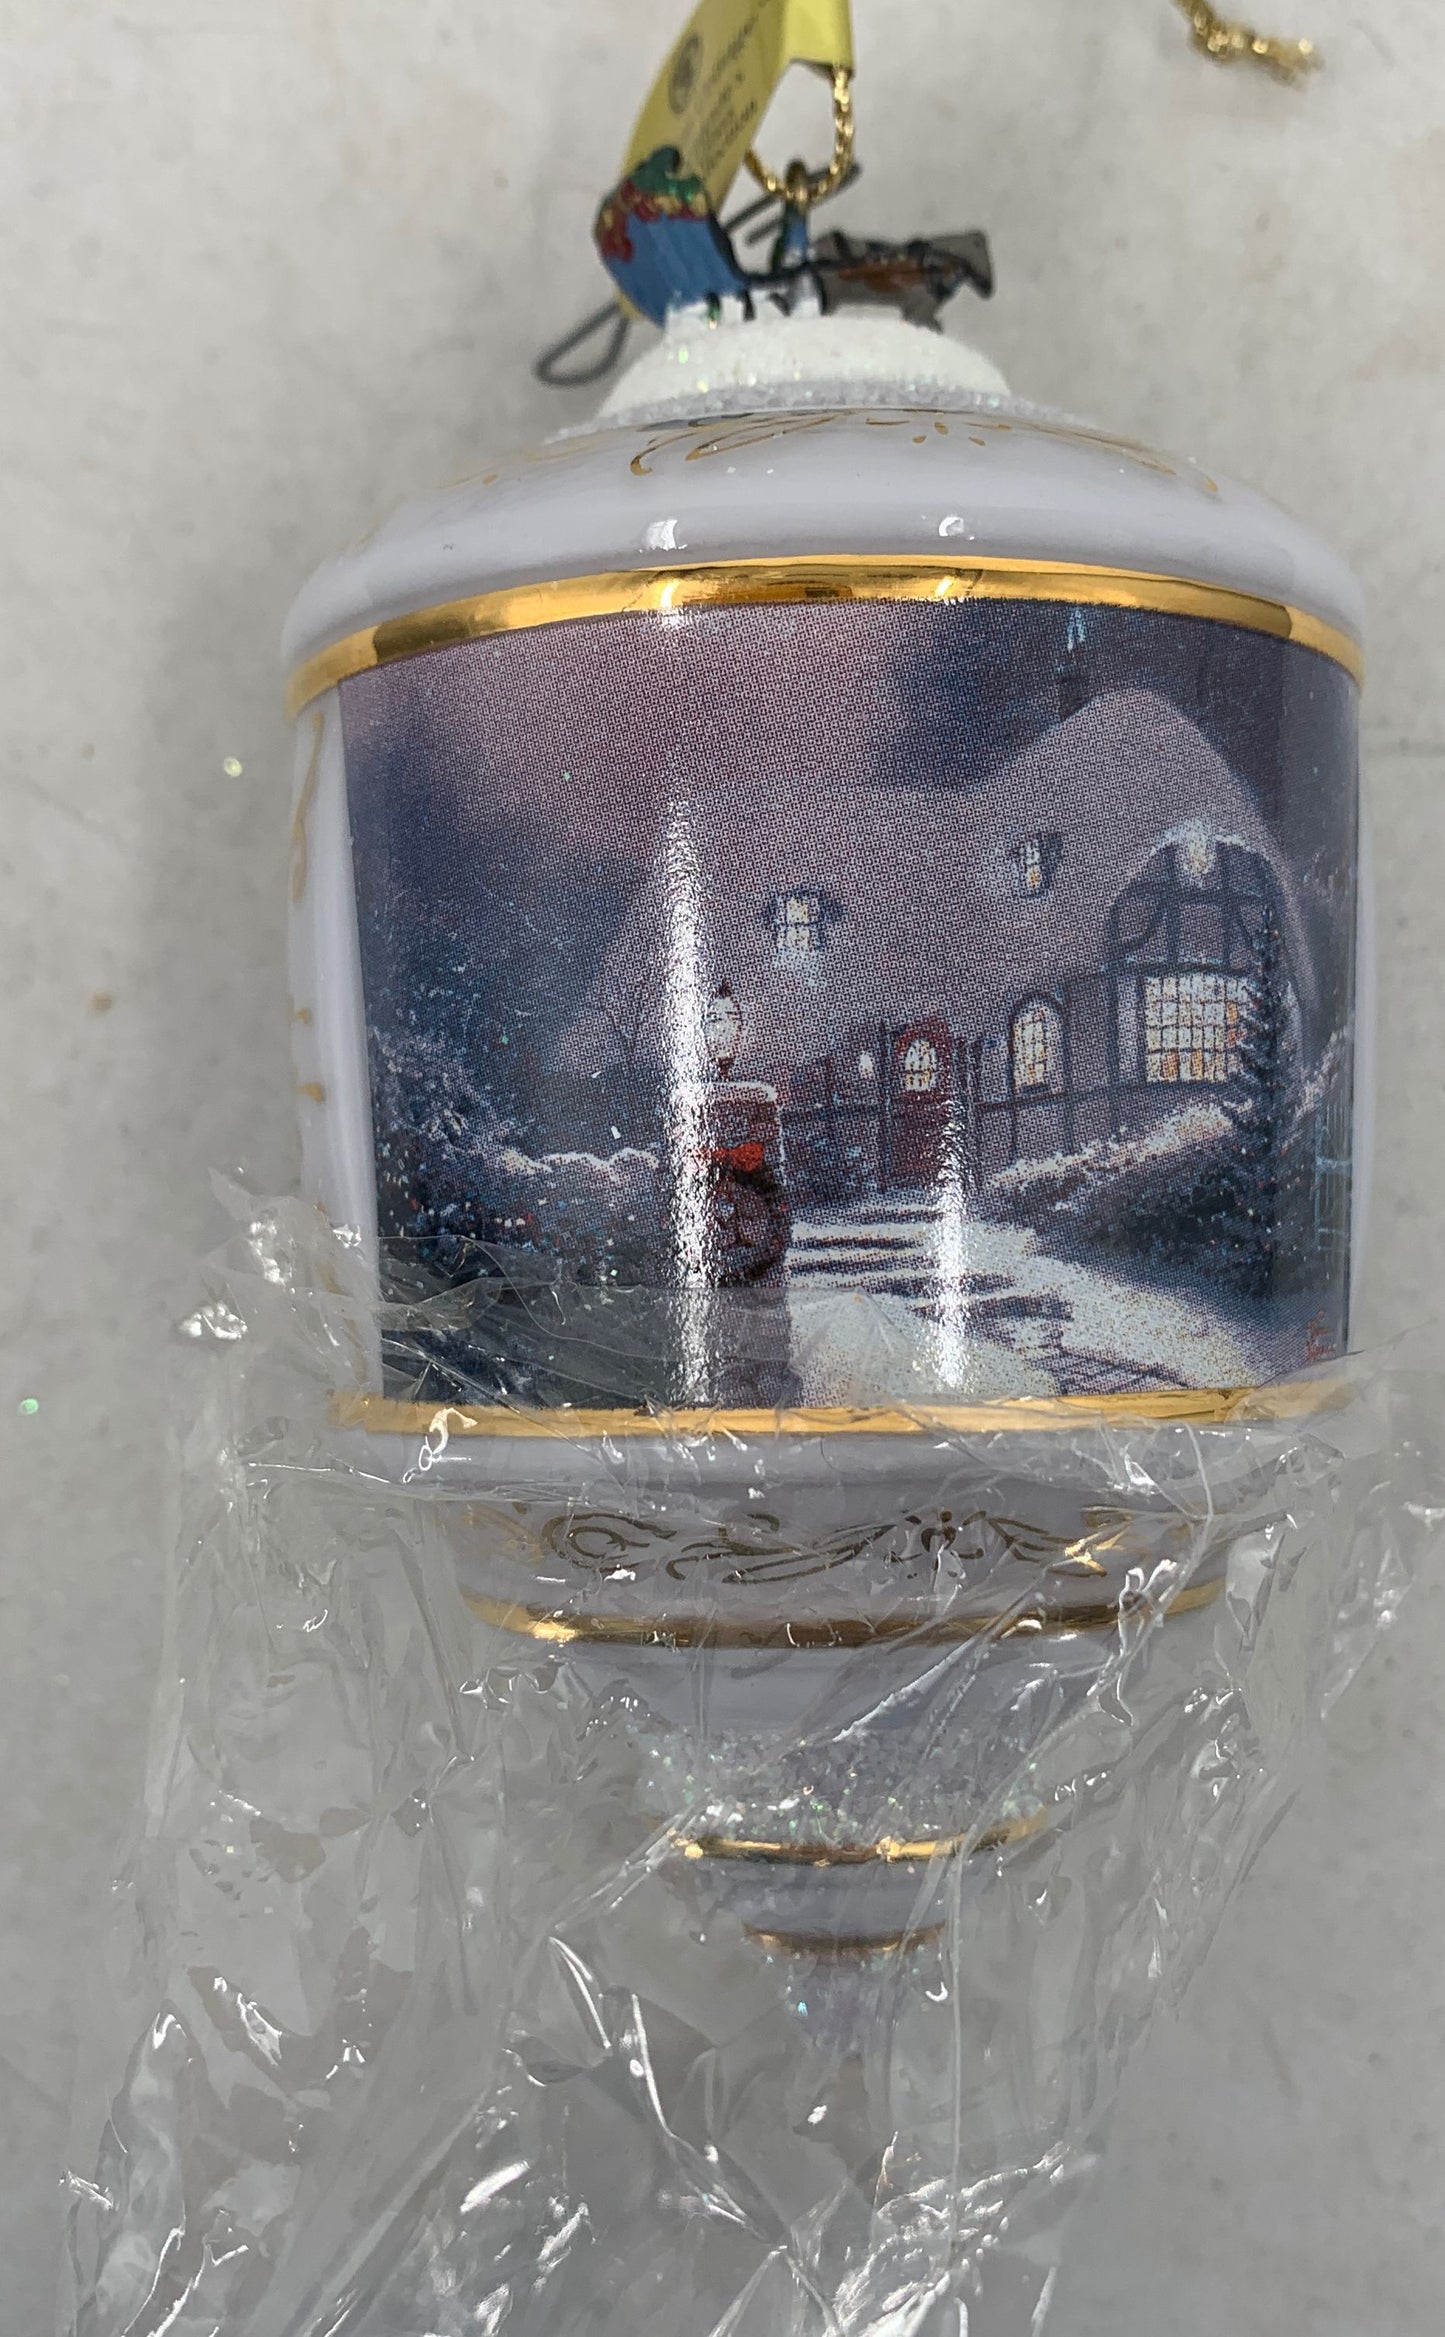 The Bradford Editions Thomas Kinkade Heirloom Glass Ornament Collection #68413